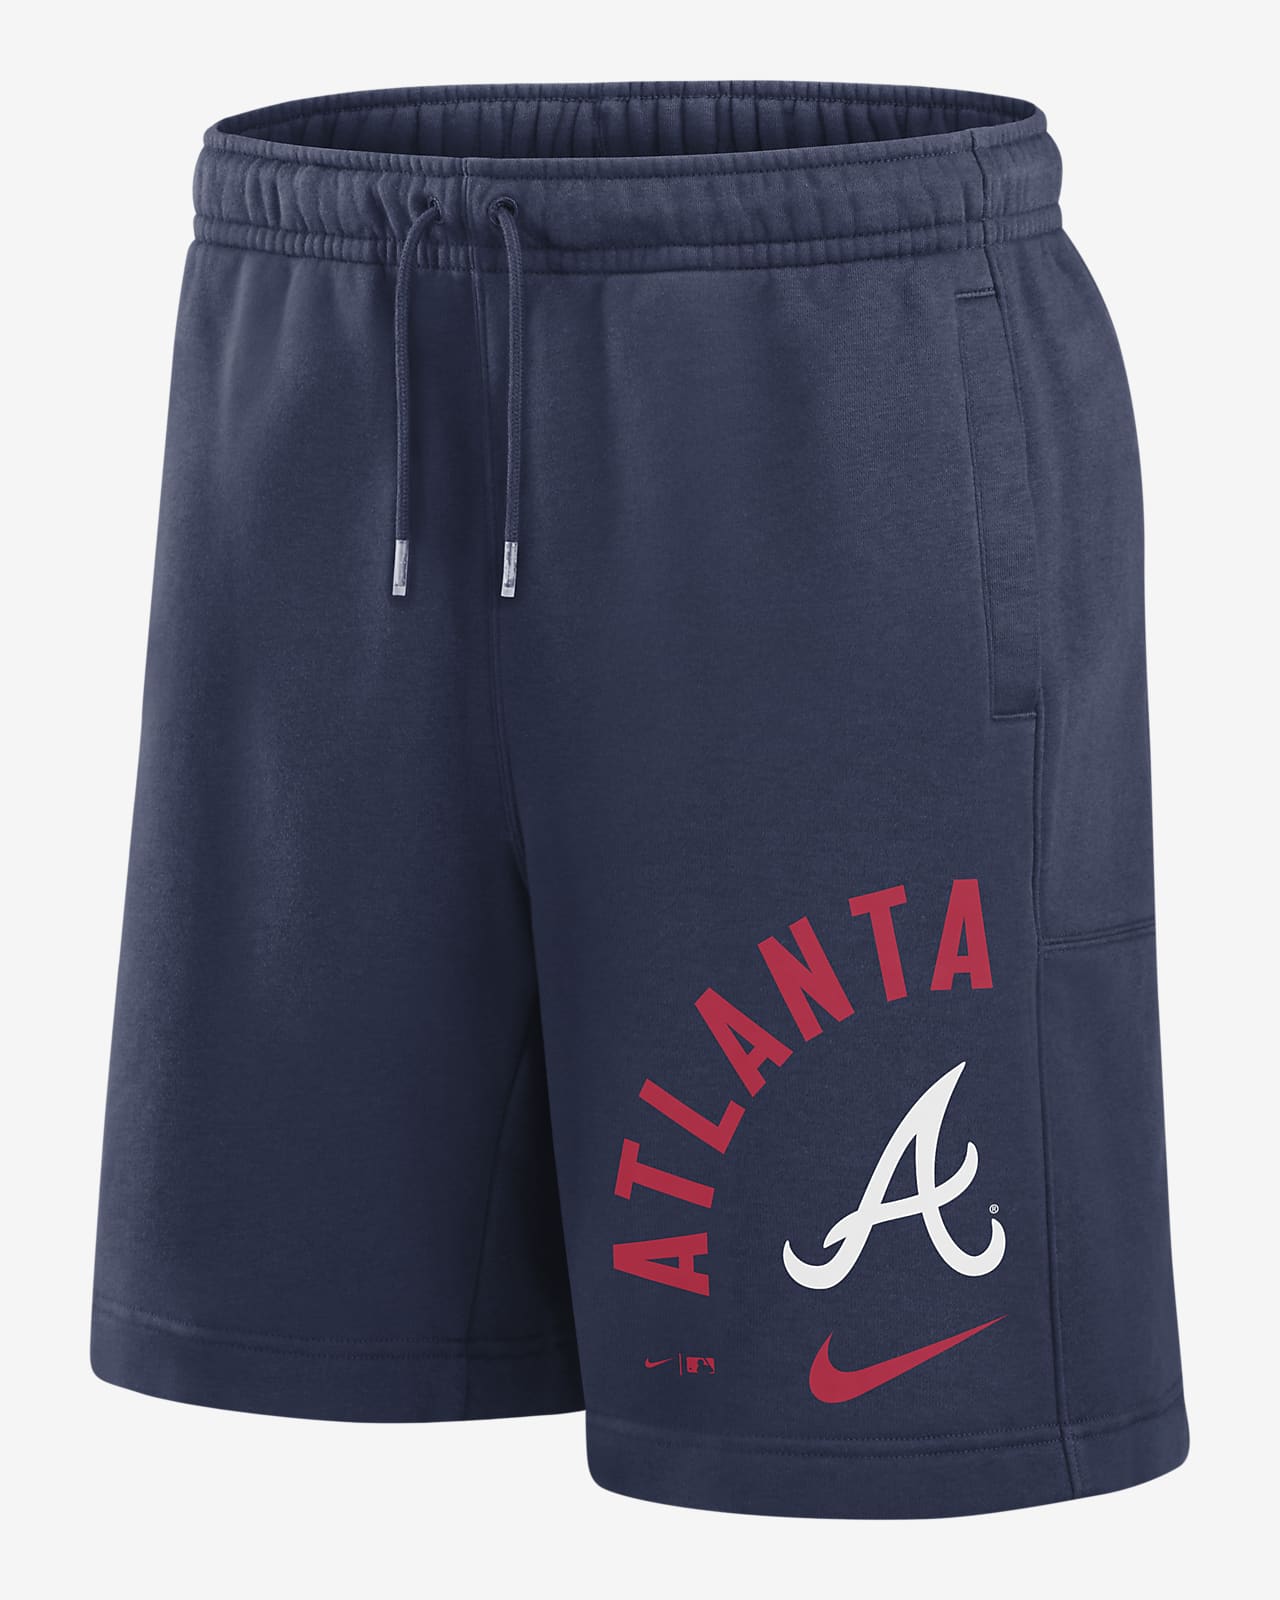 Atlanta Braves Arched Kicker Men's Nike MLB Shorts